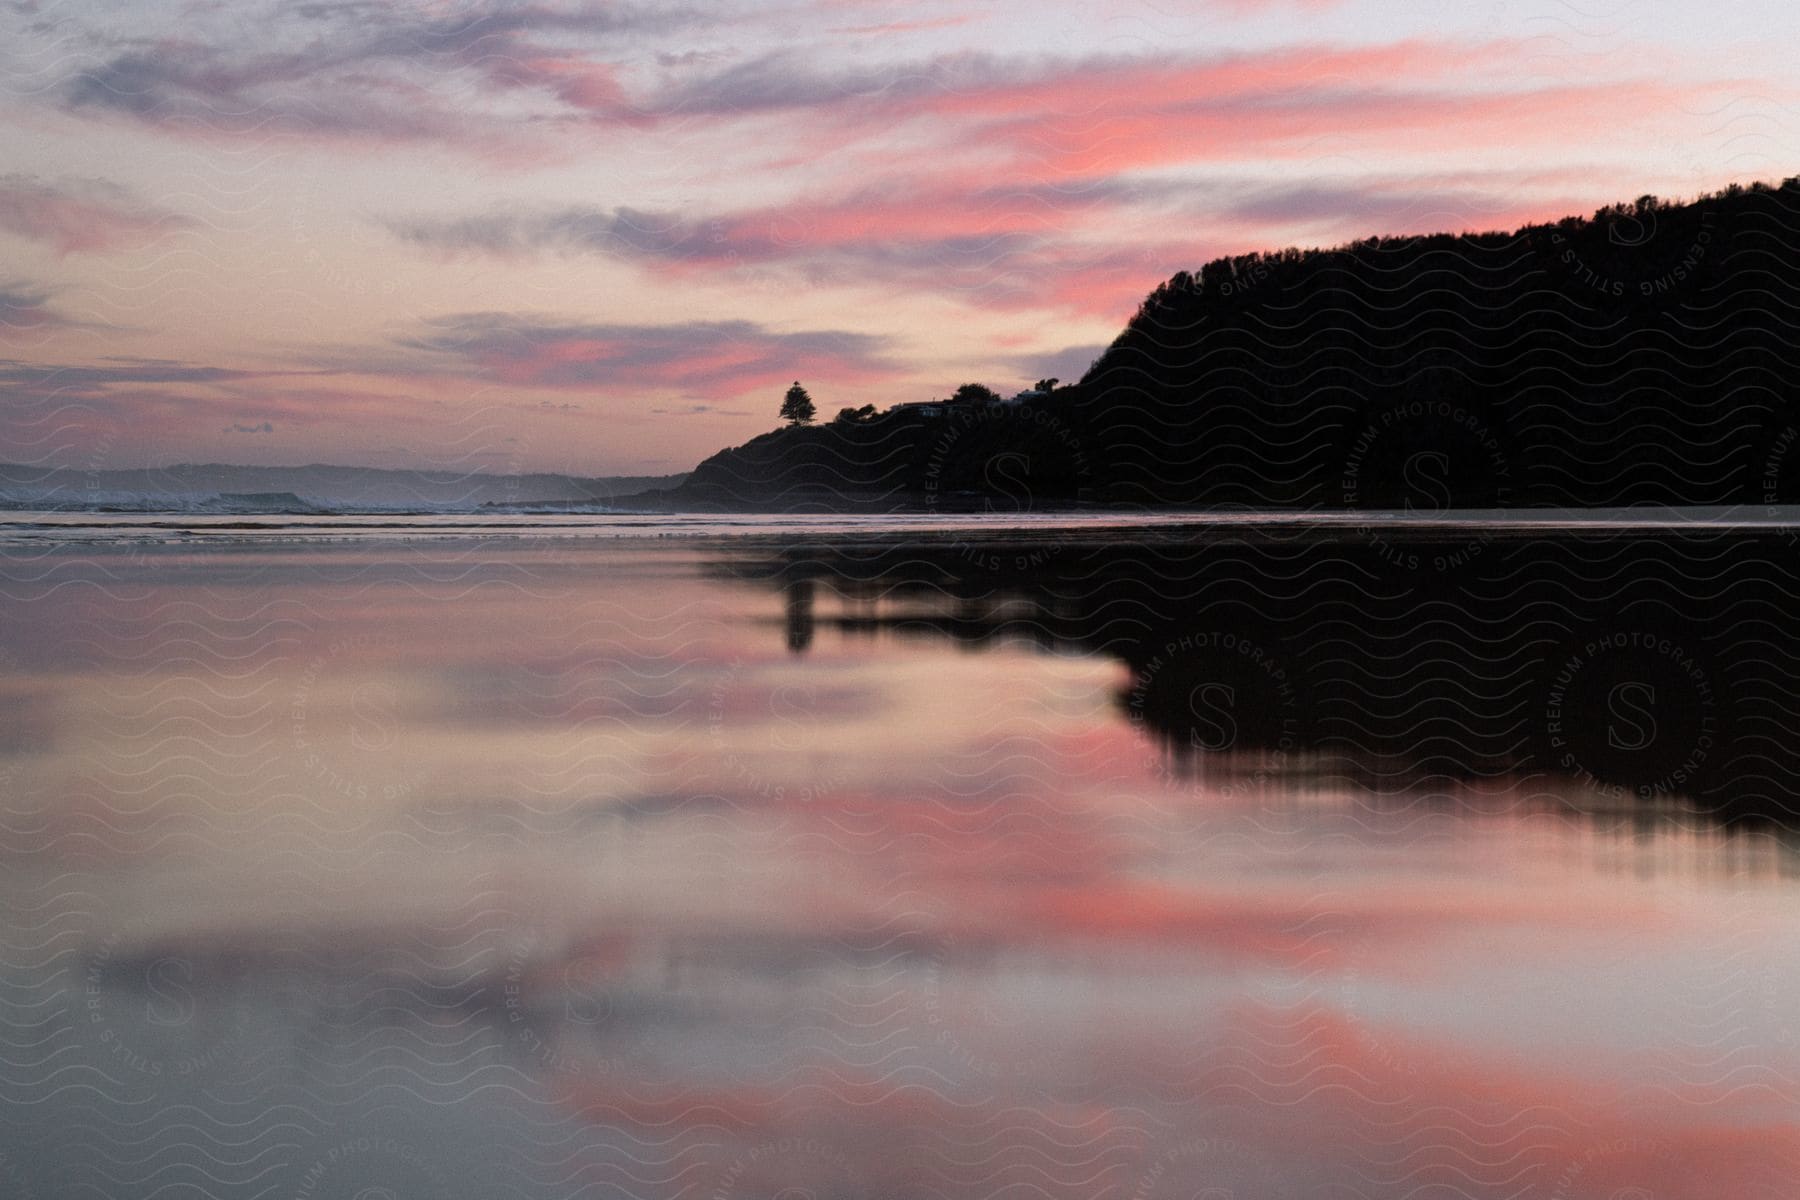 A serene sunset over a tranquil shoreline